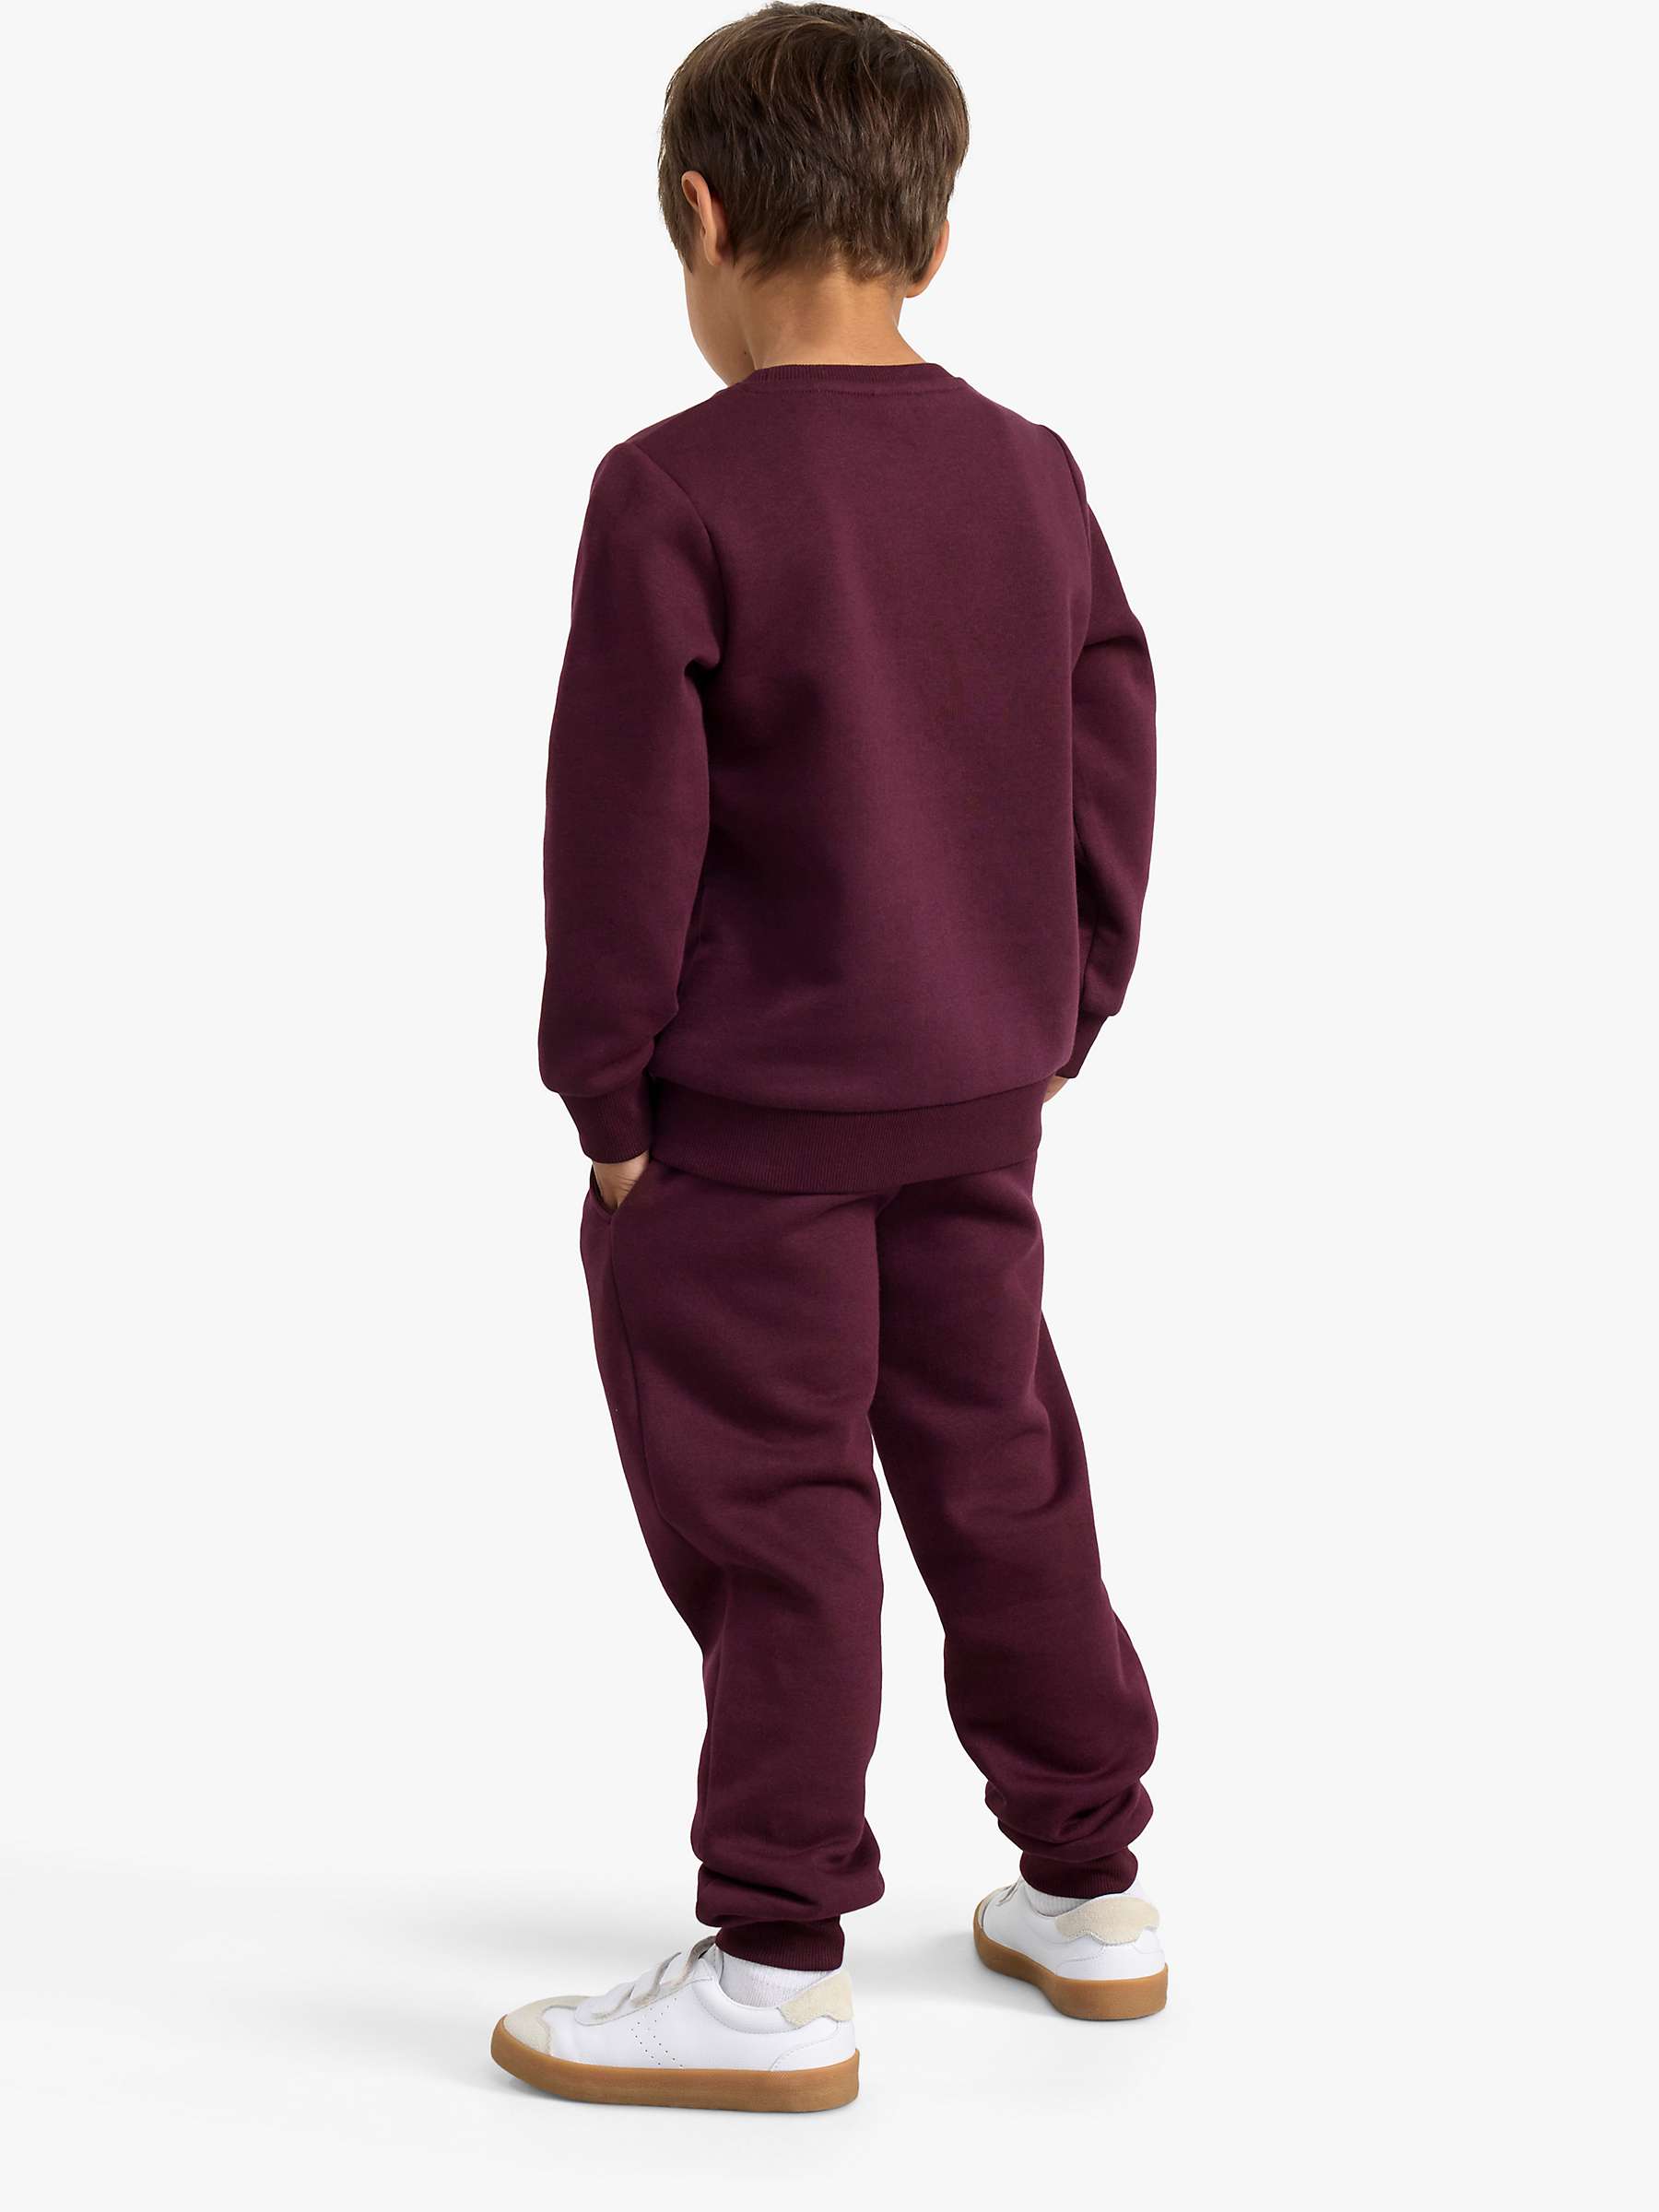 Buy Lindex Kids' Soft Basic Organic Cotton Blend Sweatshirt Online at johnlewis.com